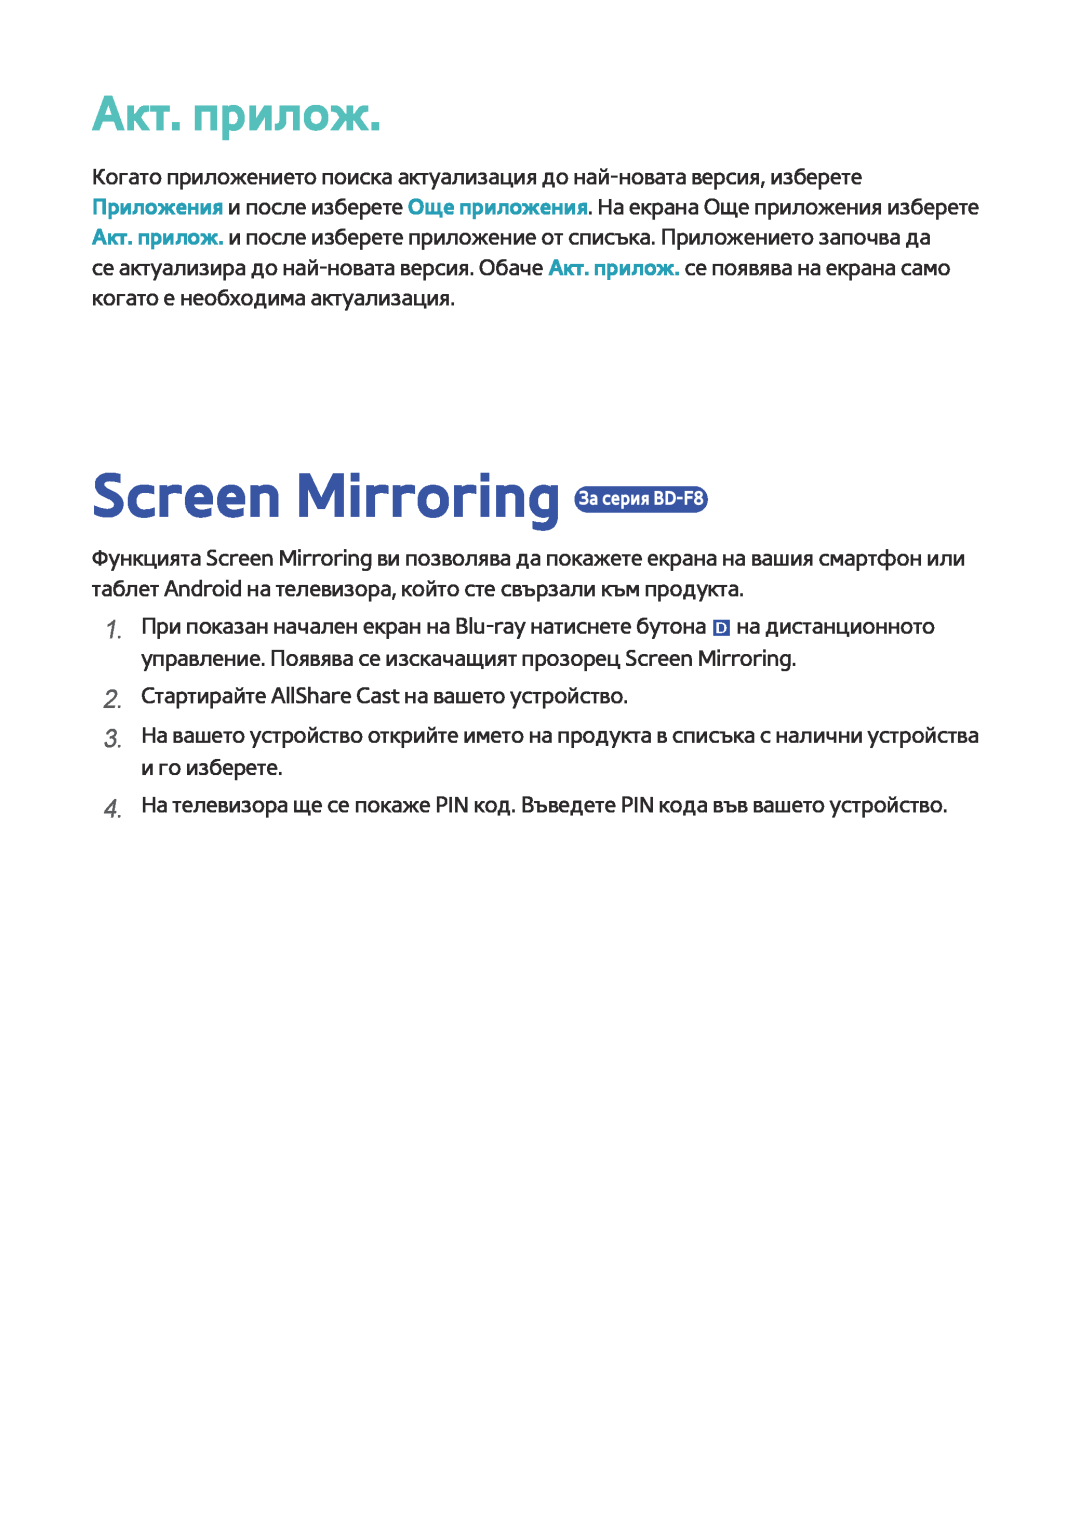 Samsung BD-F6900/EN, BD-F8500/EN manual Screen Mirroring За серия BD-F8, Акт. прилож 